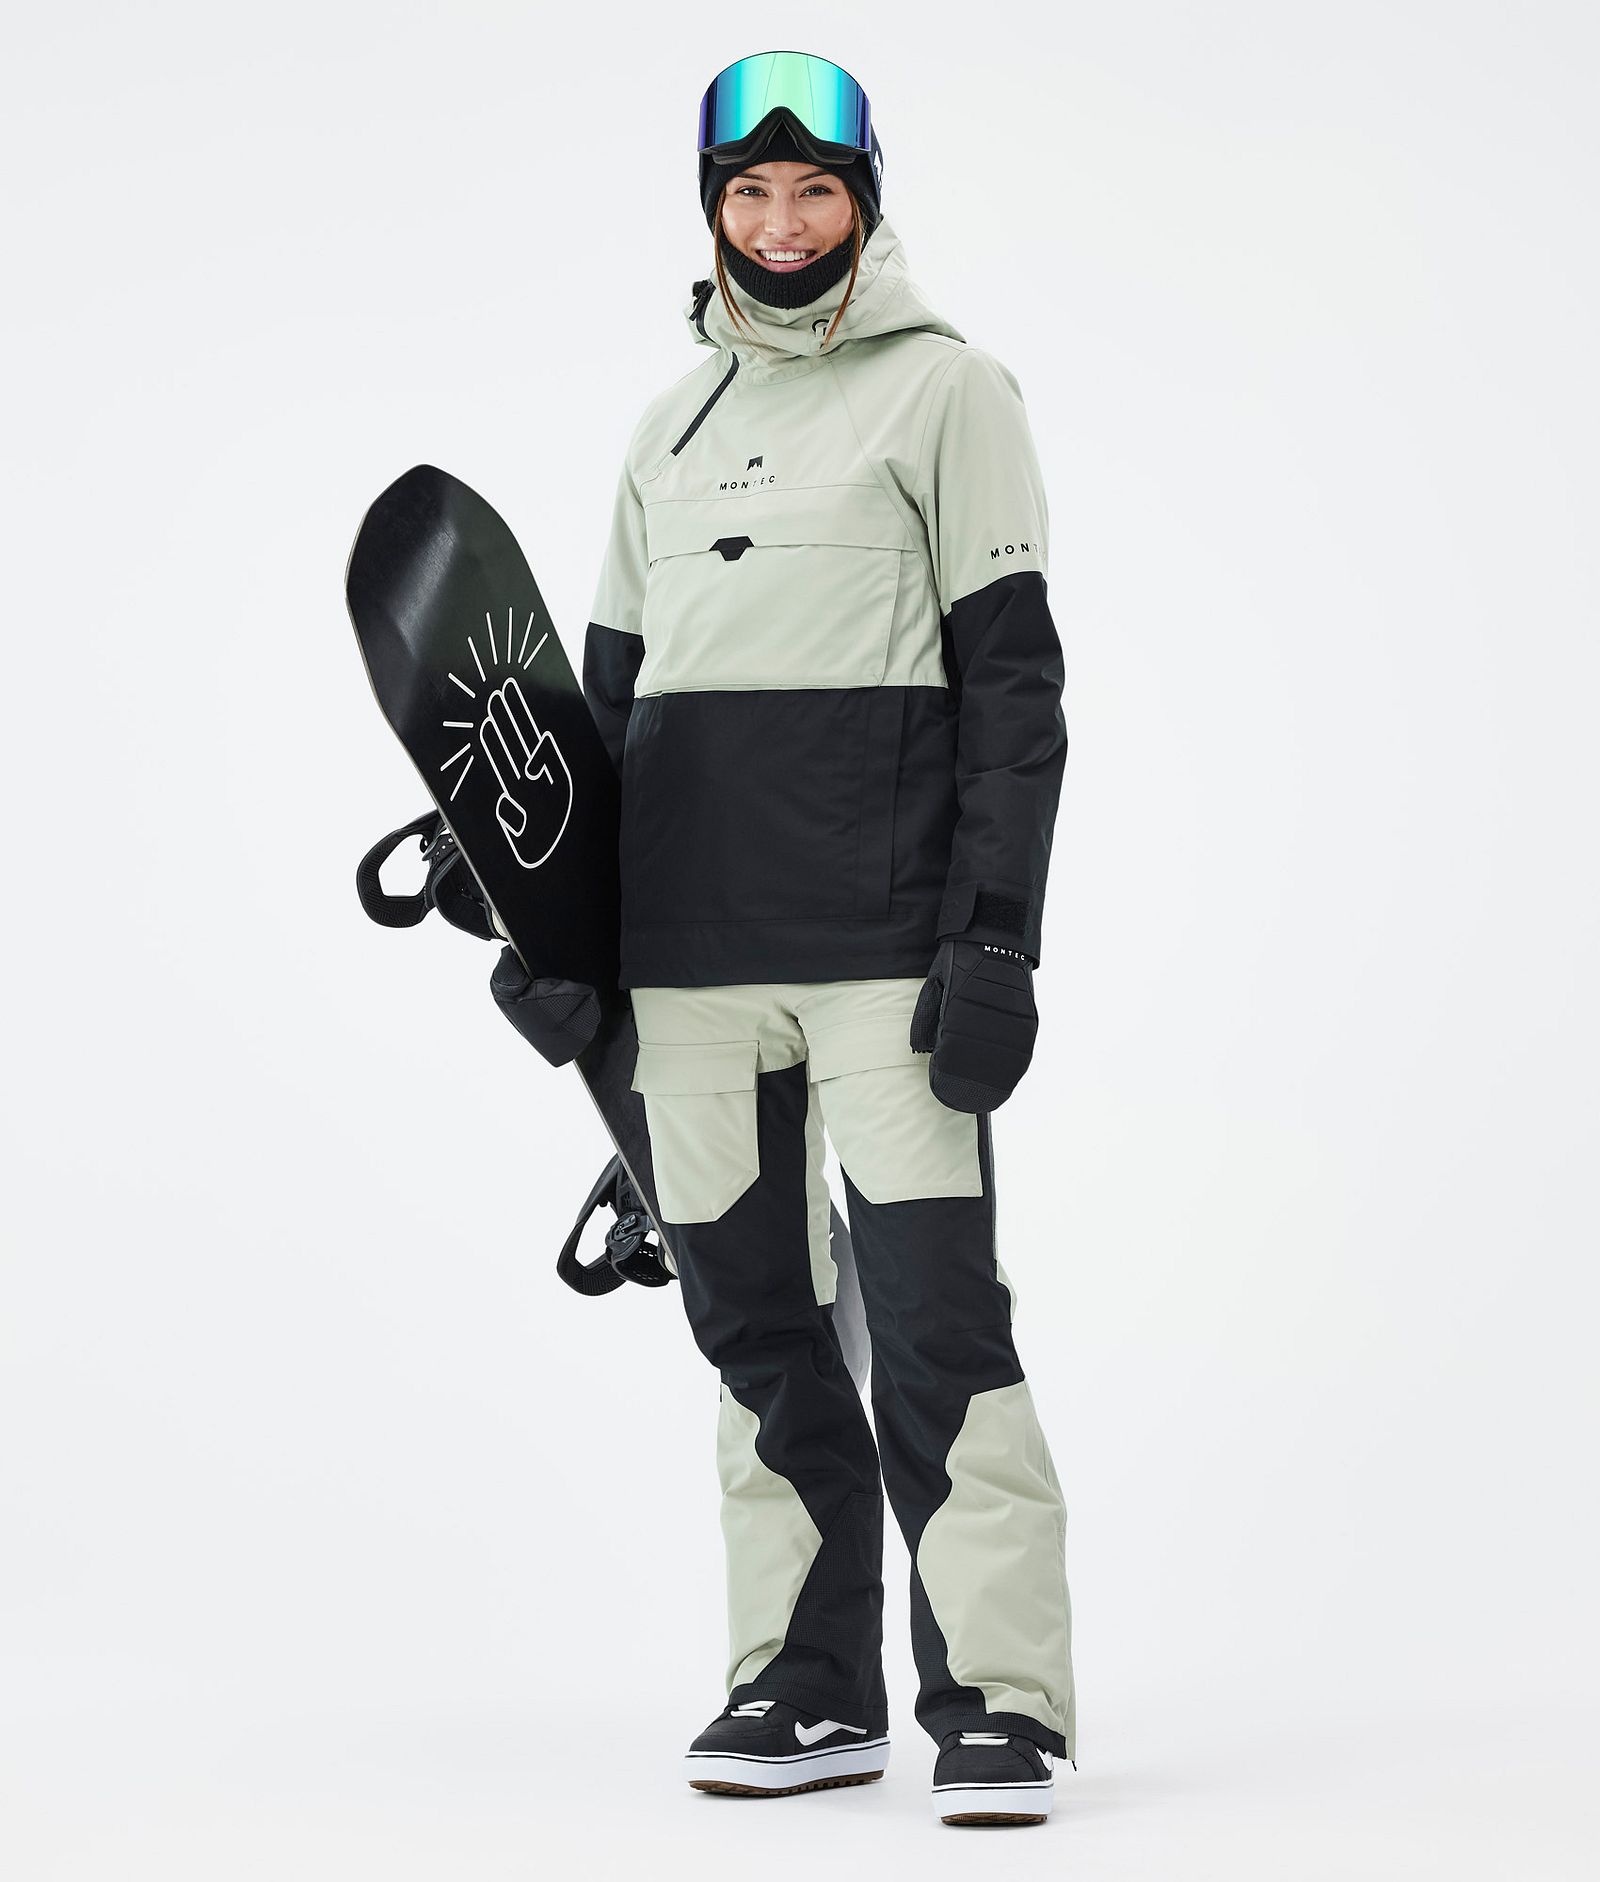 Montec Fawk W Snowboard Bukser Dame Soft Green/Black